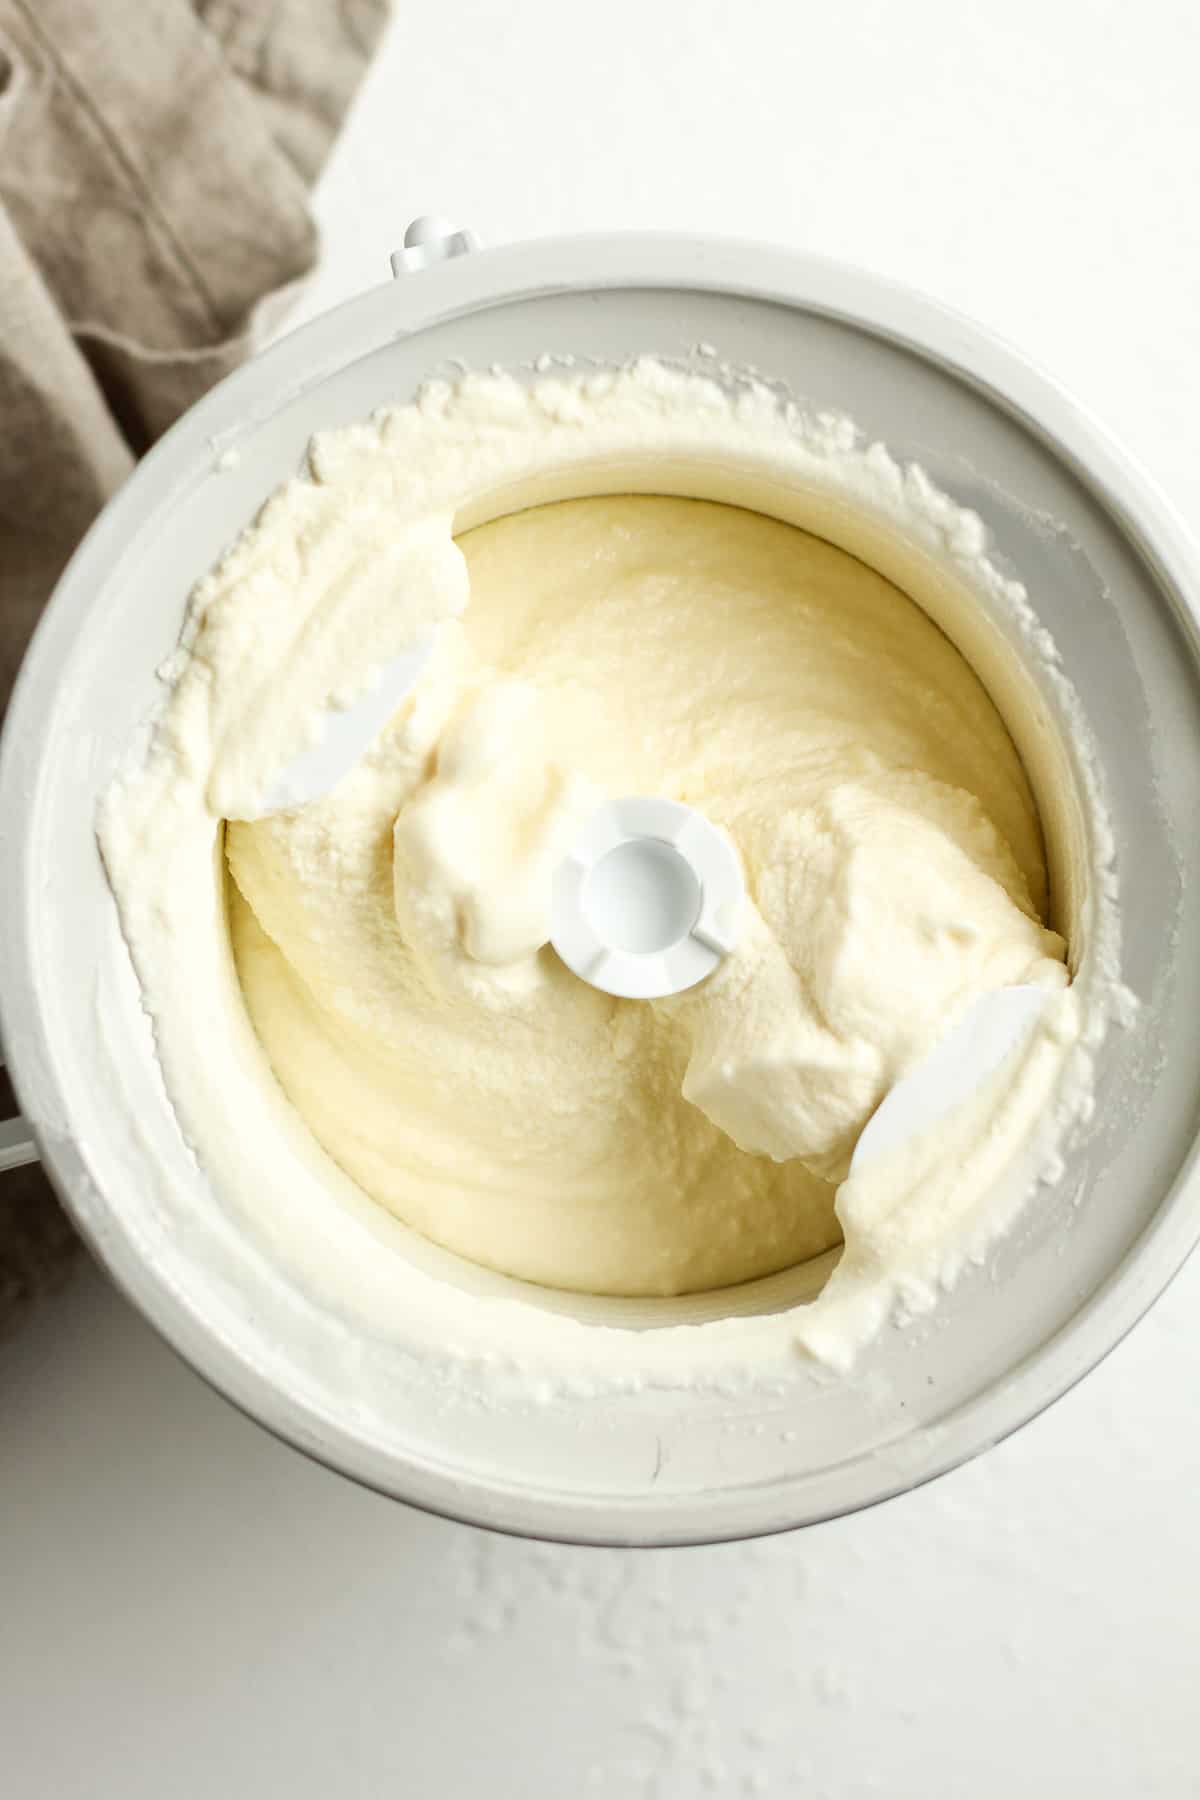 A Kitchenaid bowl of the just made vanilla ice cream base.